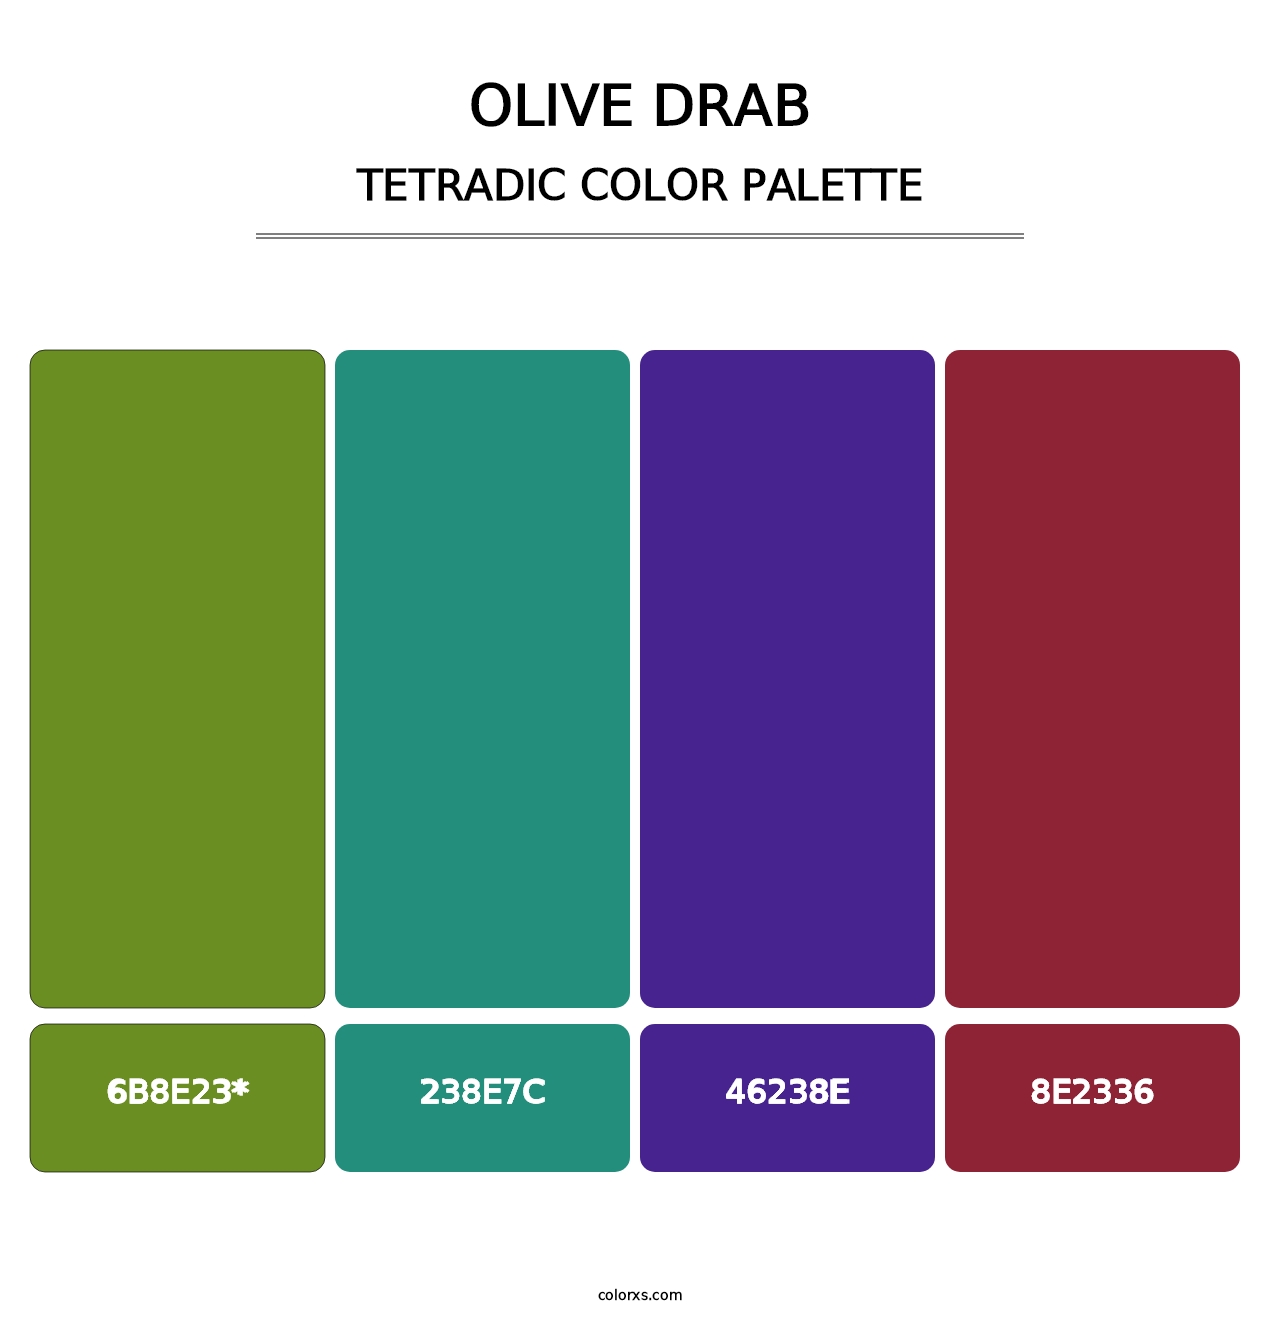 Olive Drab - Tetradic Color Palette